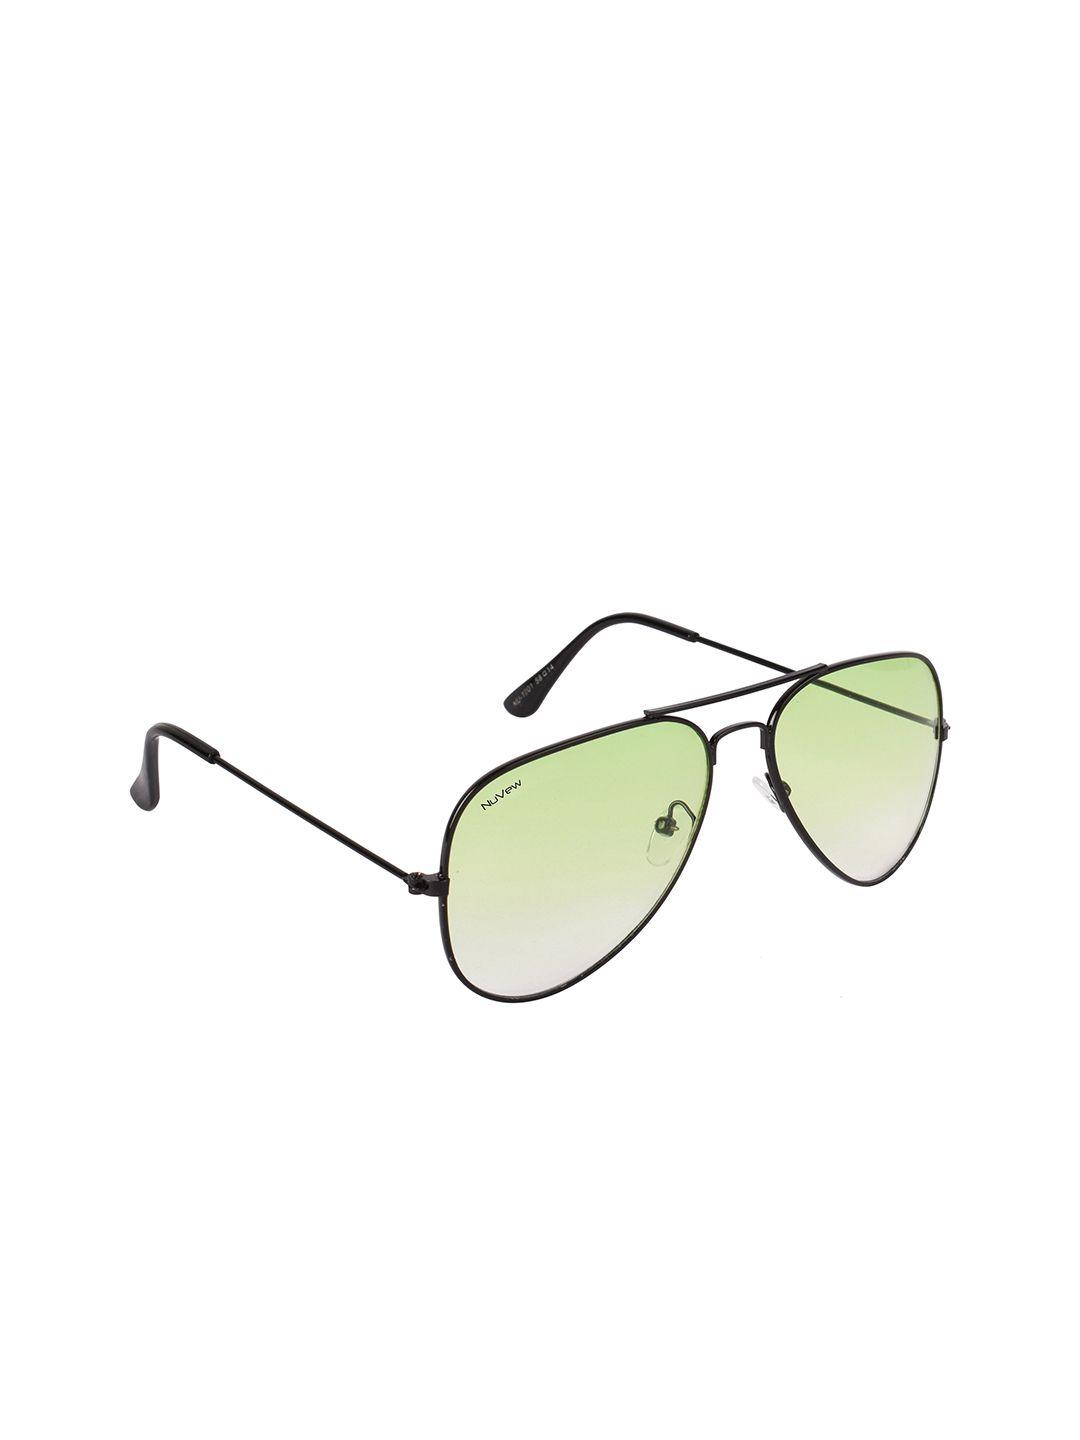 nuvew unisex green lens & black aviator sunglasses - 16153-29-nw-1001-green